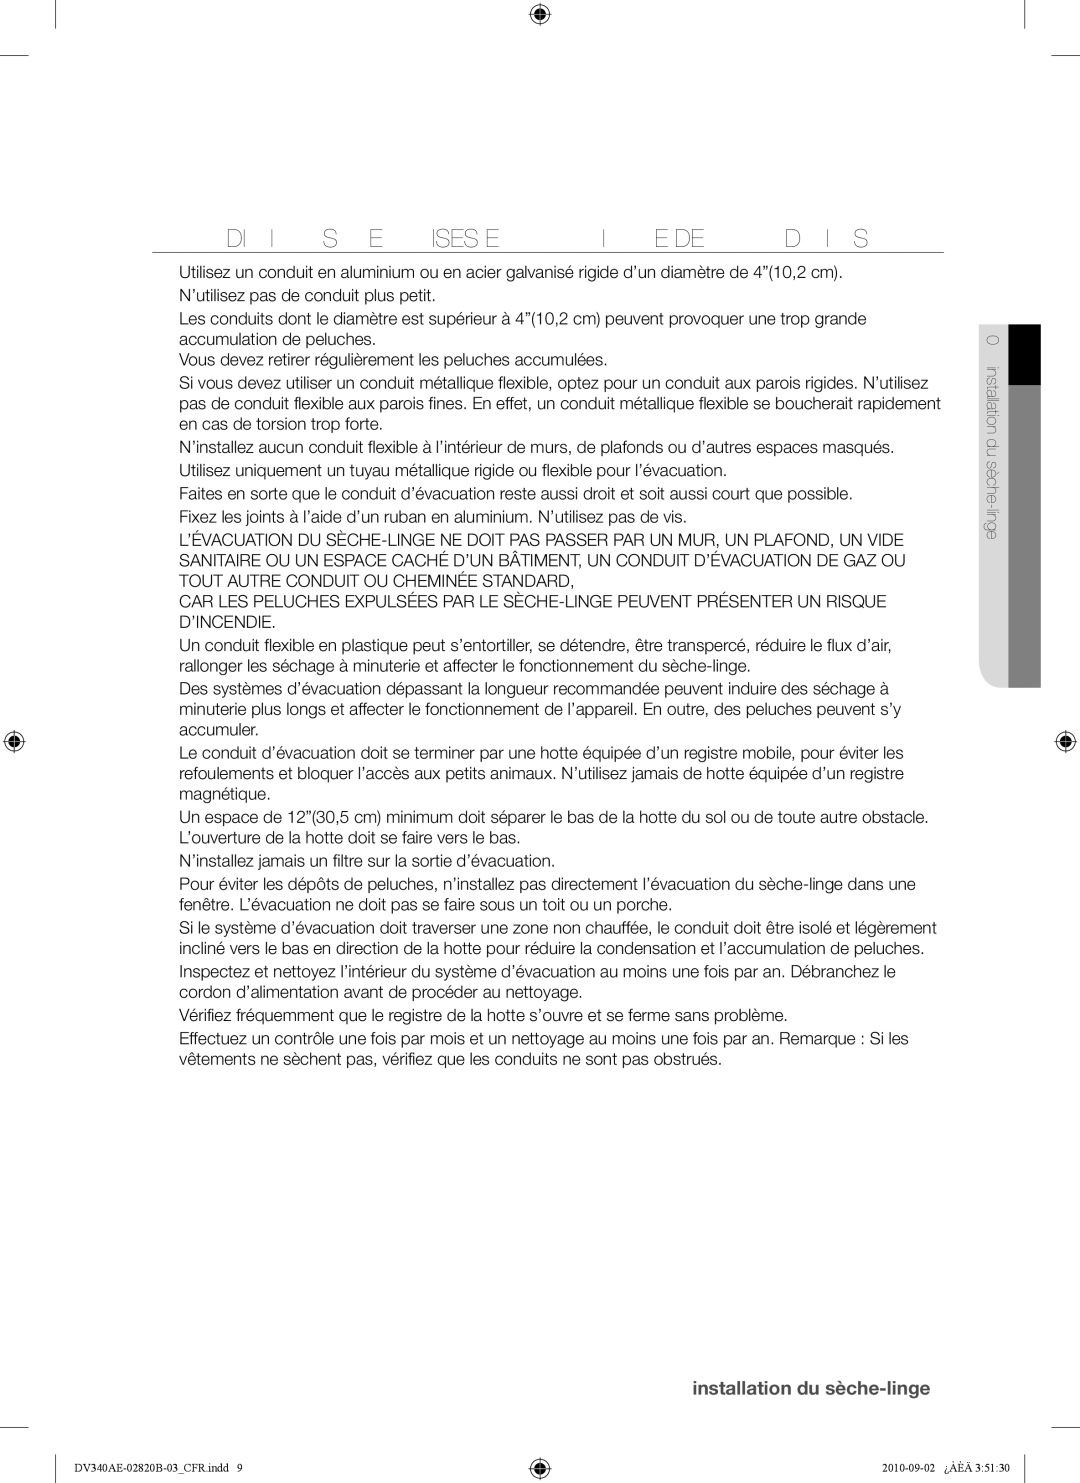 Samsung DV330AEW, DV340AEW user manual Conditions Requises EN Matière DE Conduits 